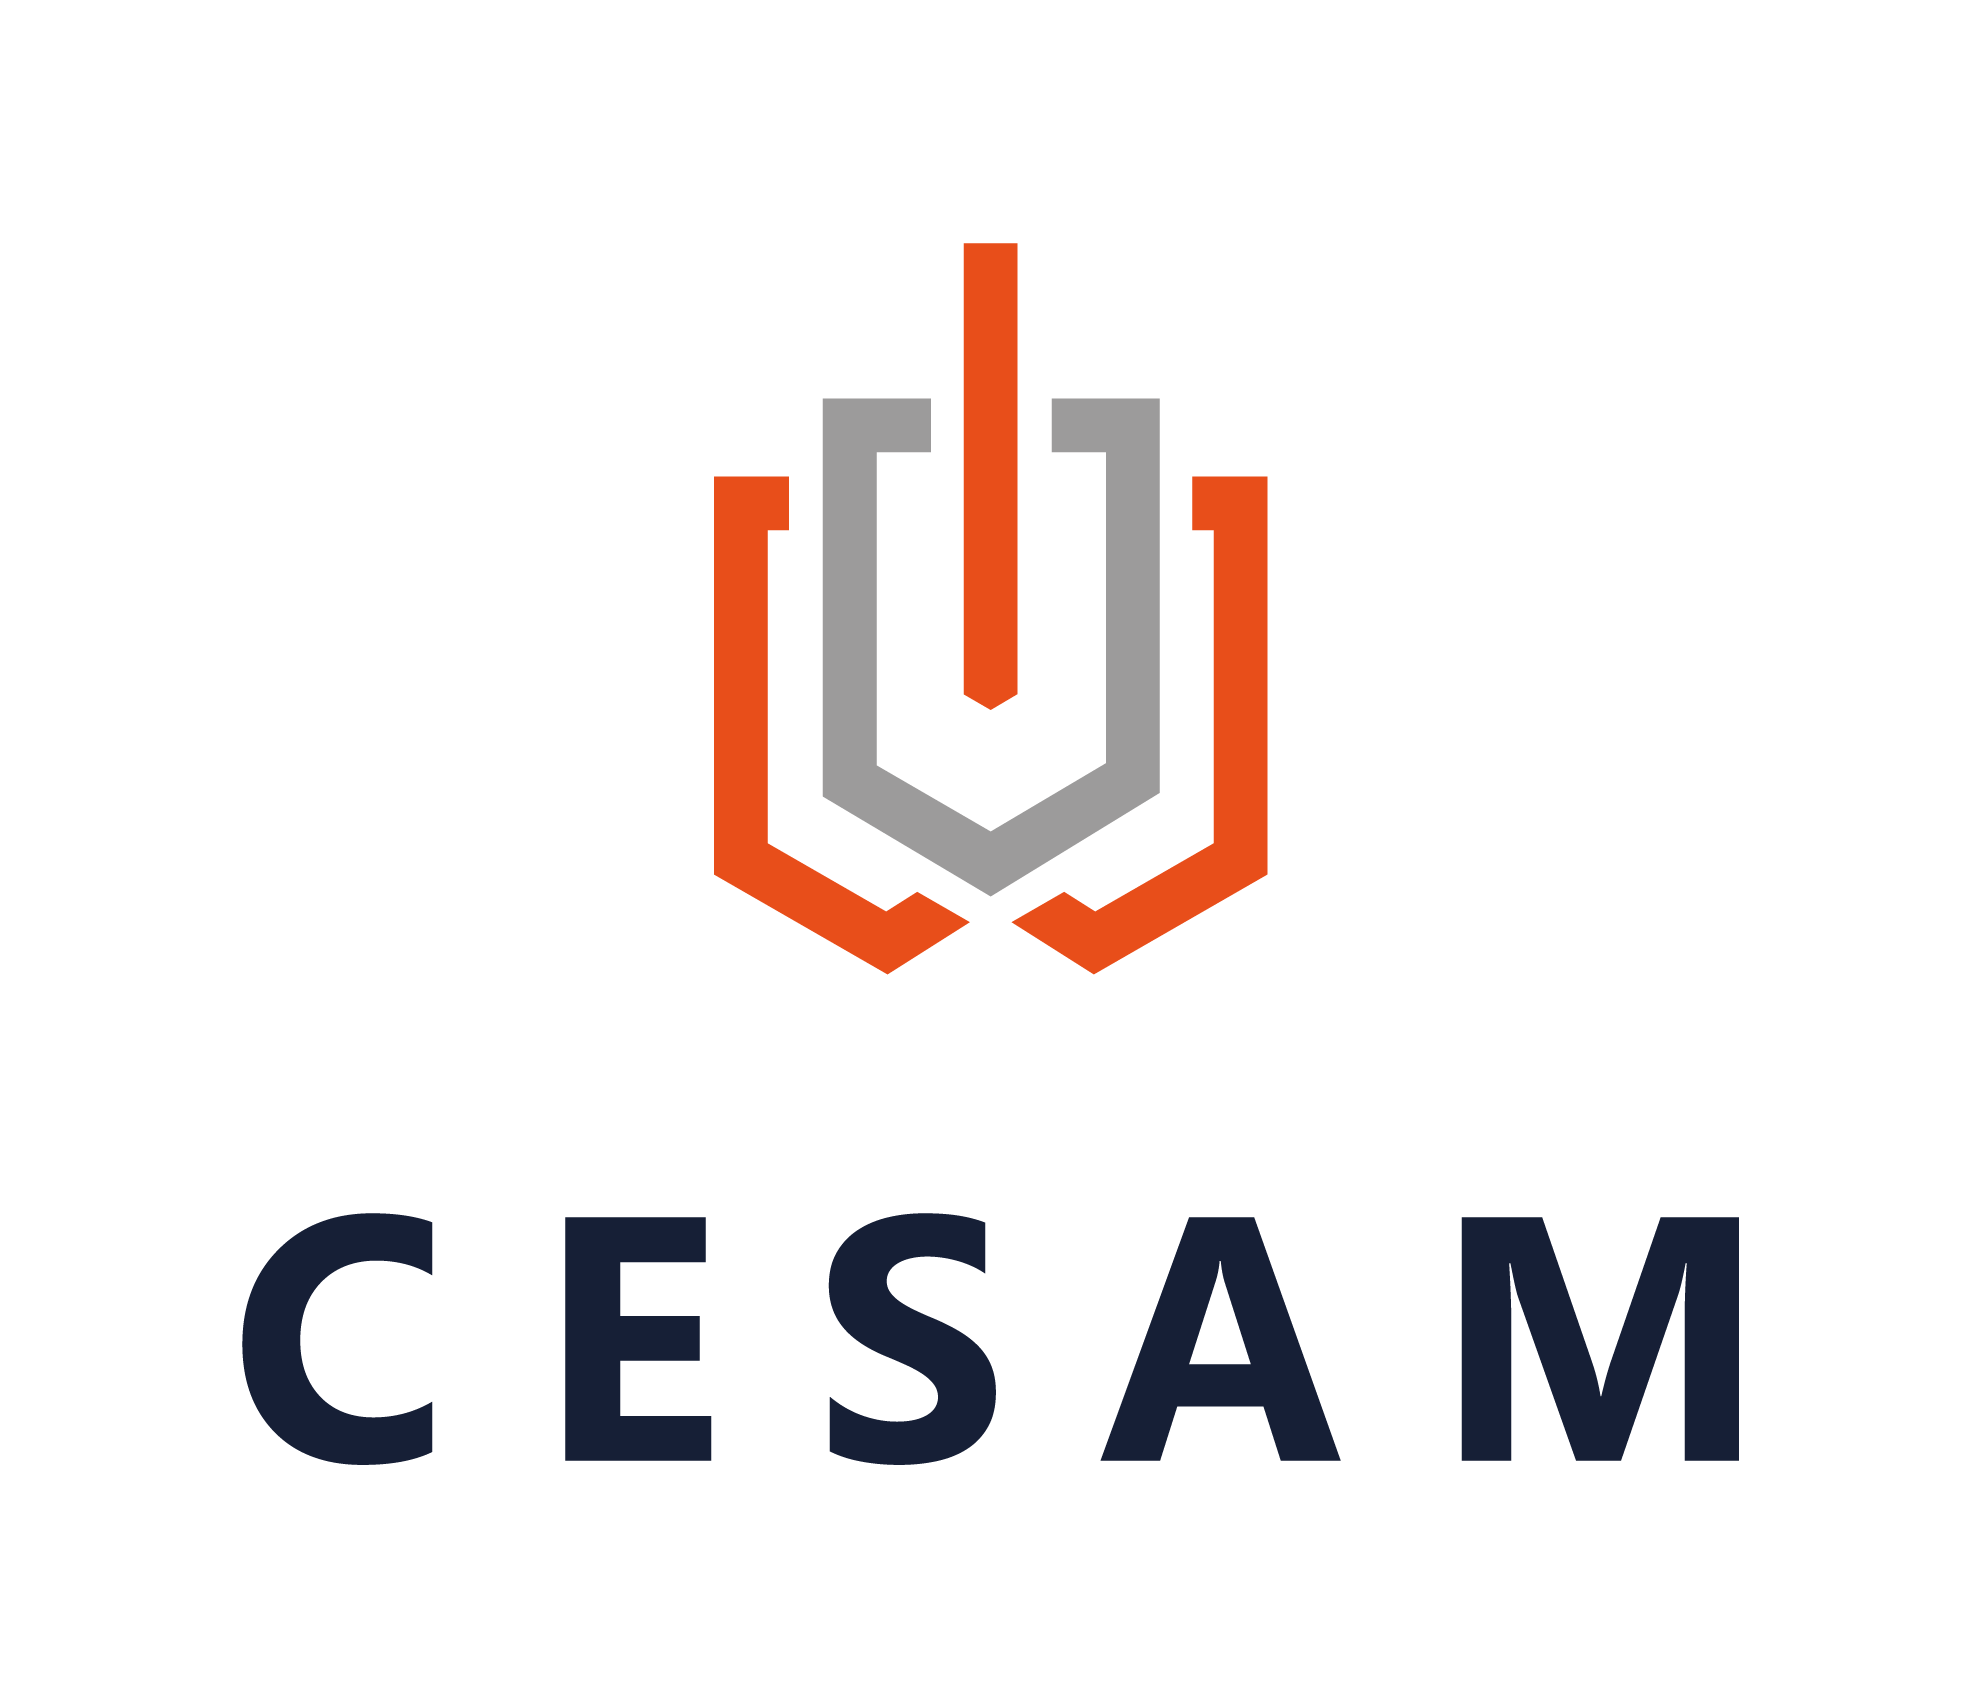 CESAM logo